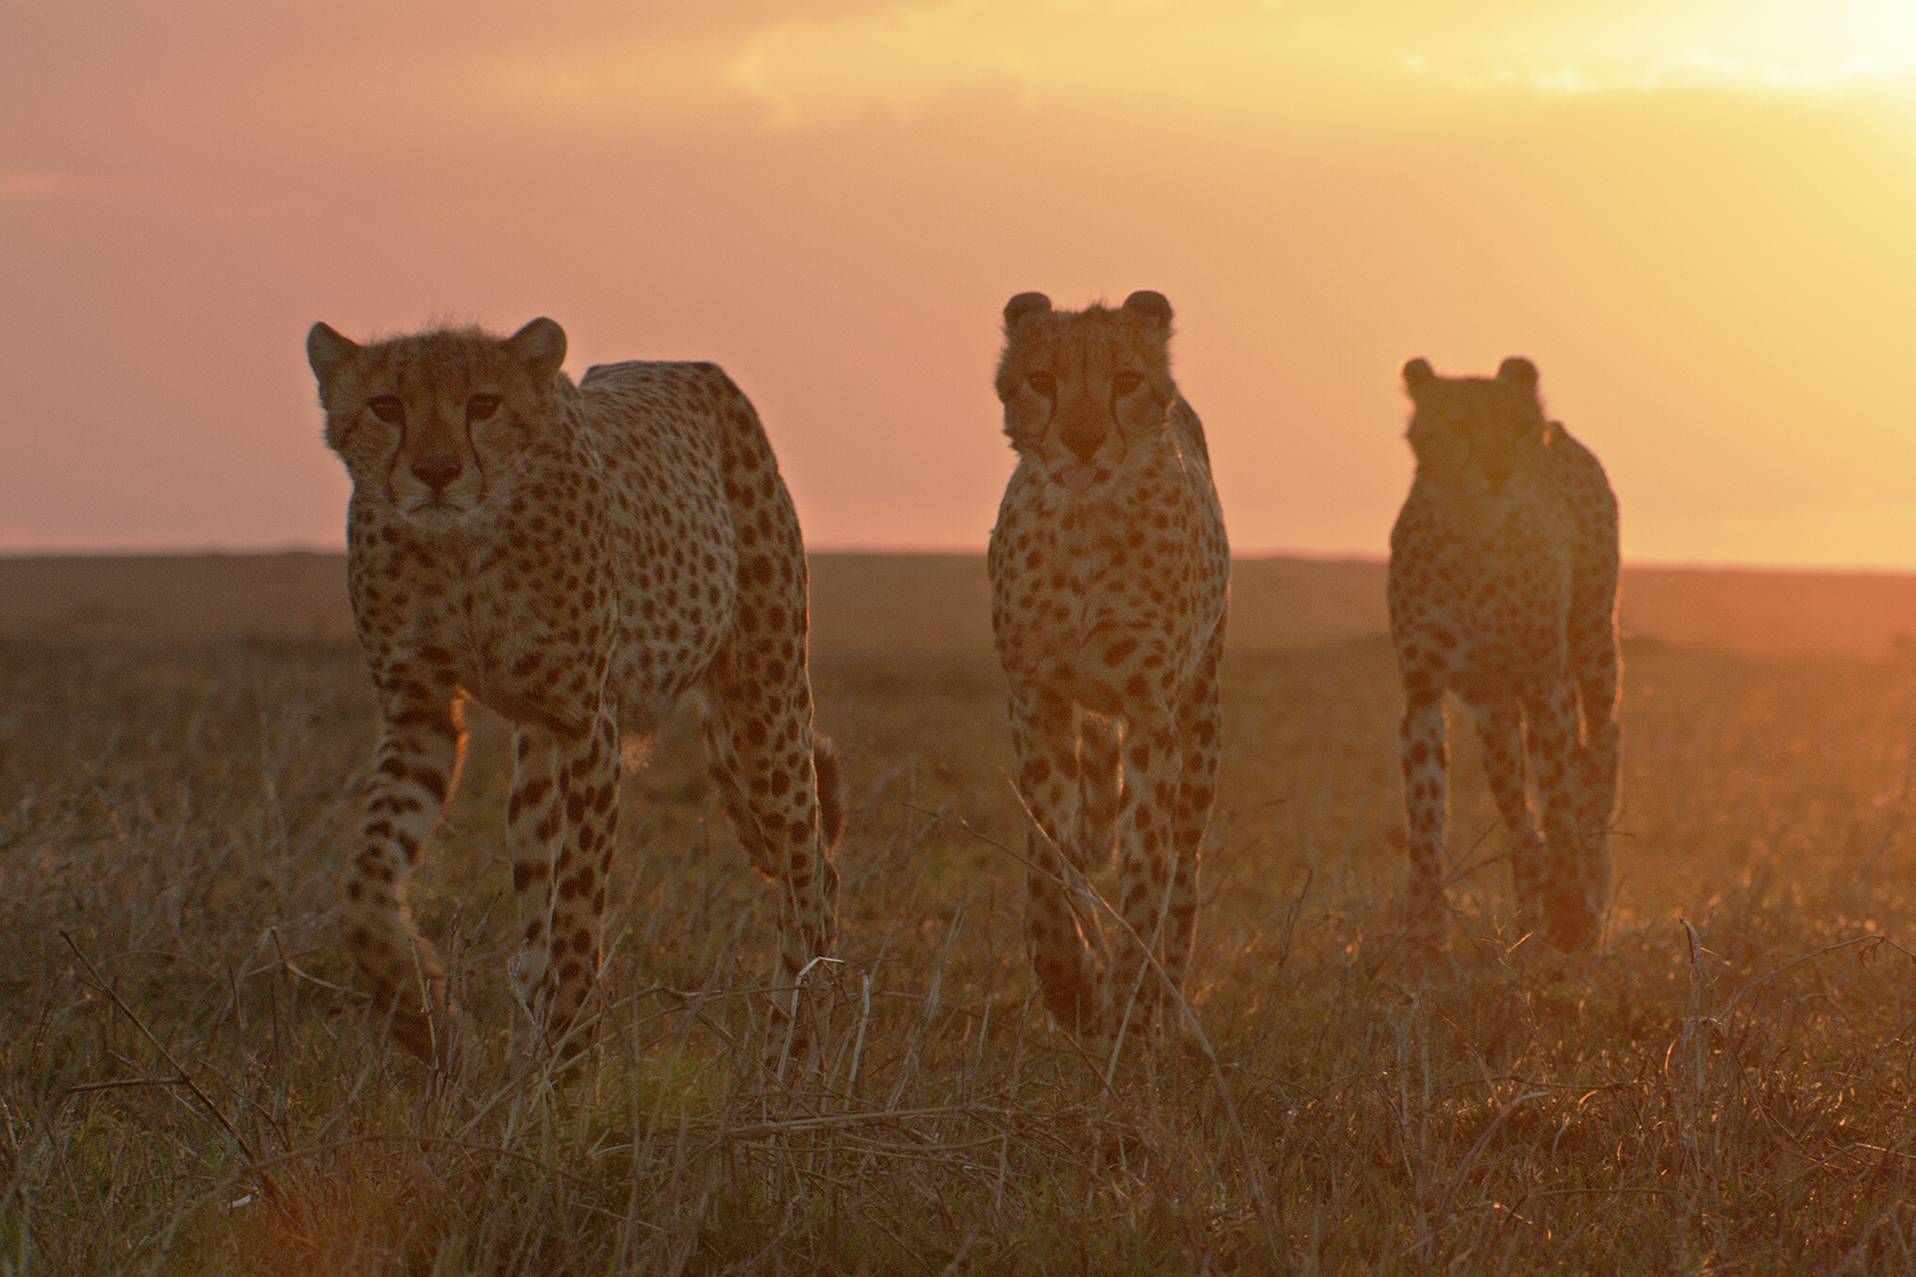 Programm | Information und Infotainment | Terra X – Serengeti III (© John Downer Productions Ltd.)